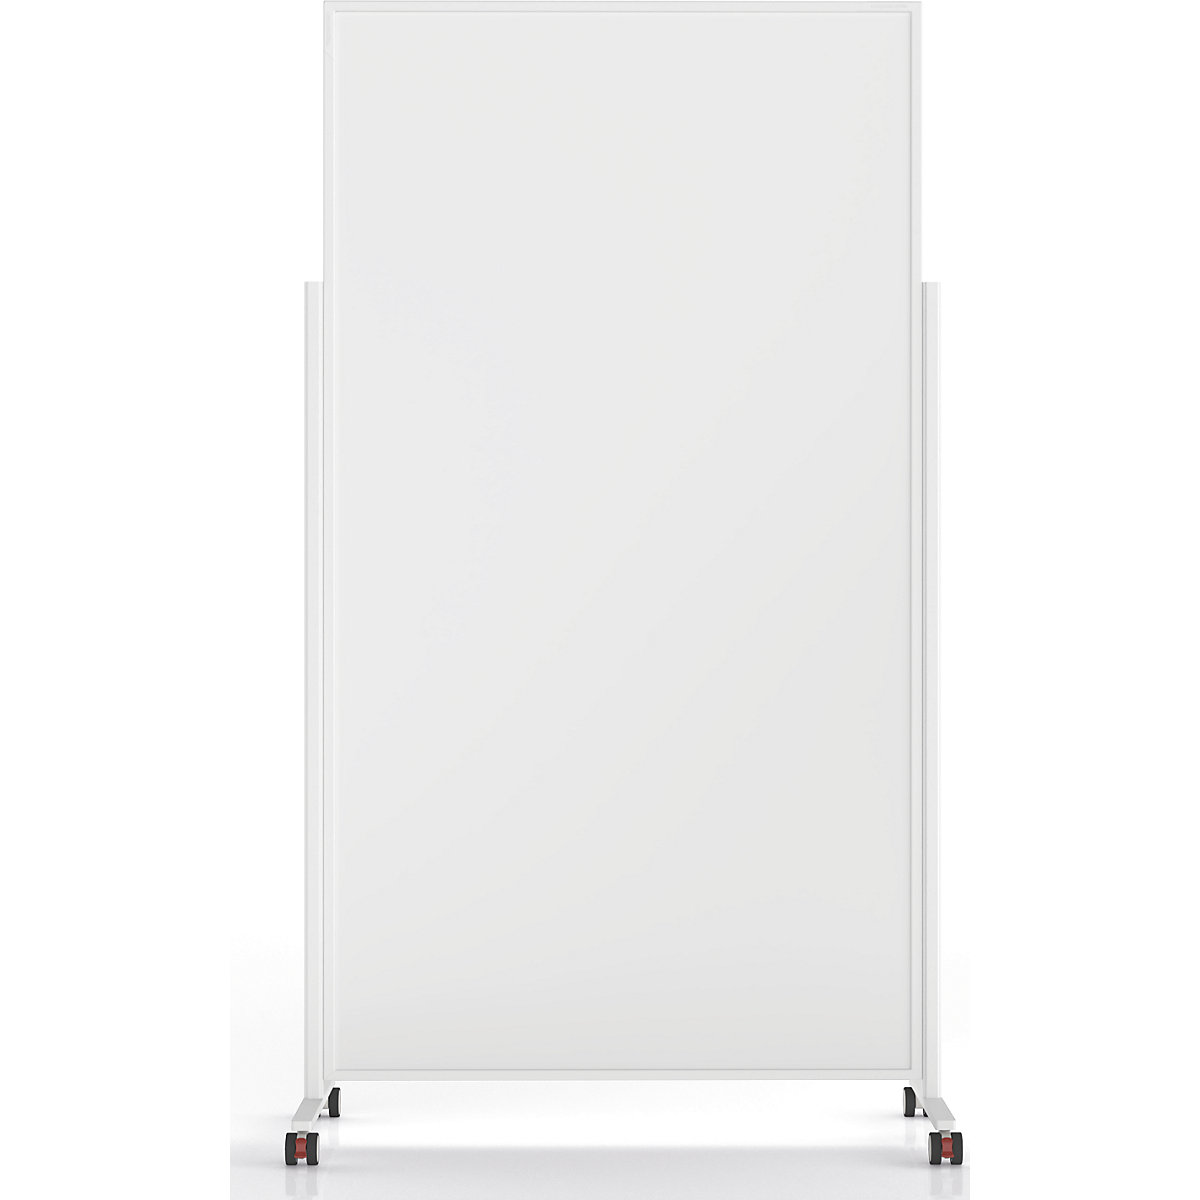 Designerska biała tablica VARIO, mobilna – magnetoplan (Zdjęcie produktu 8)-7